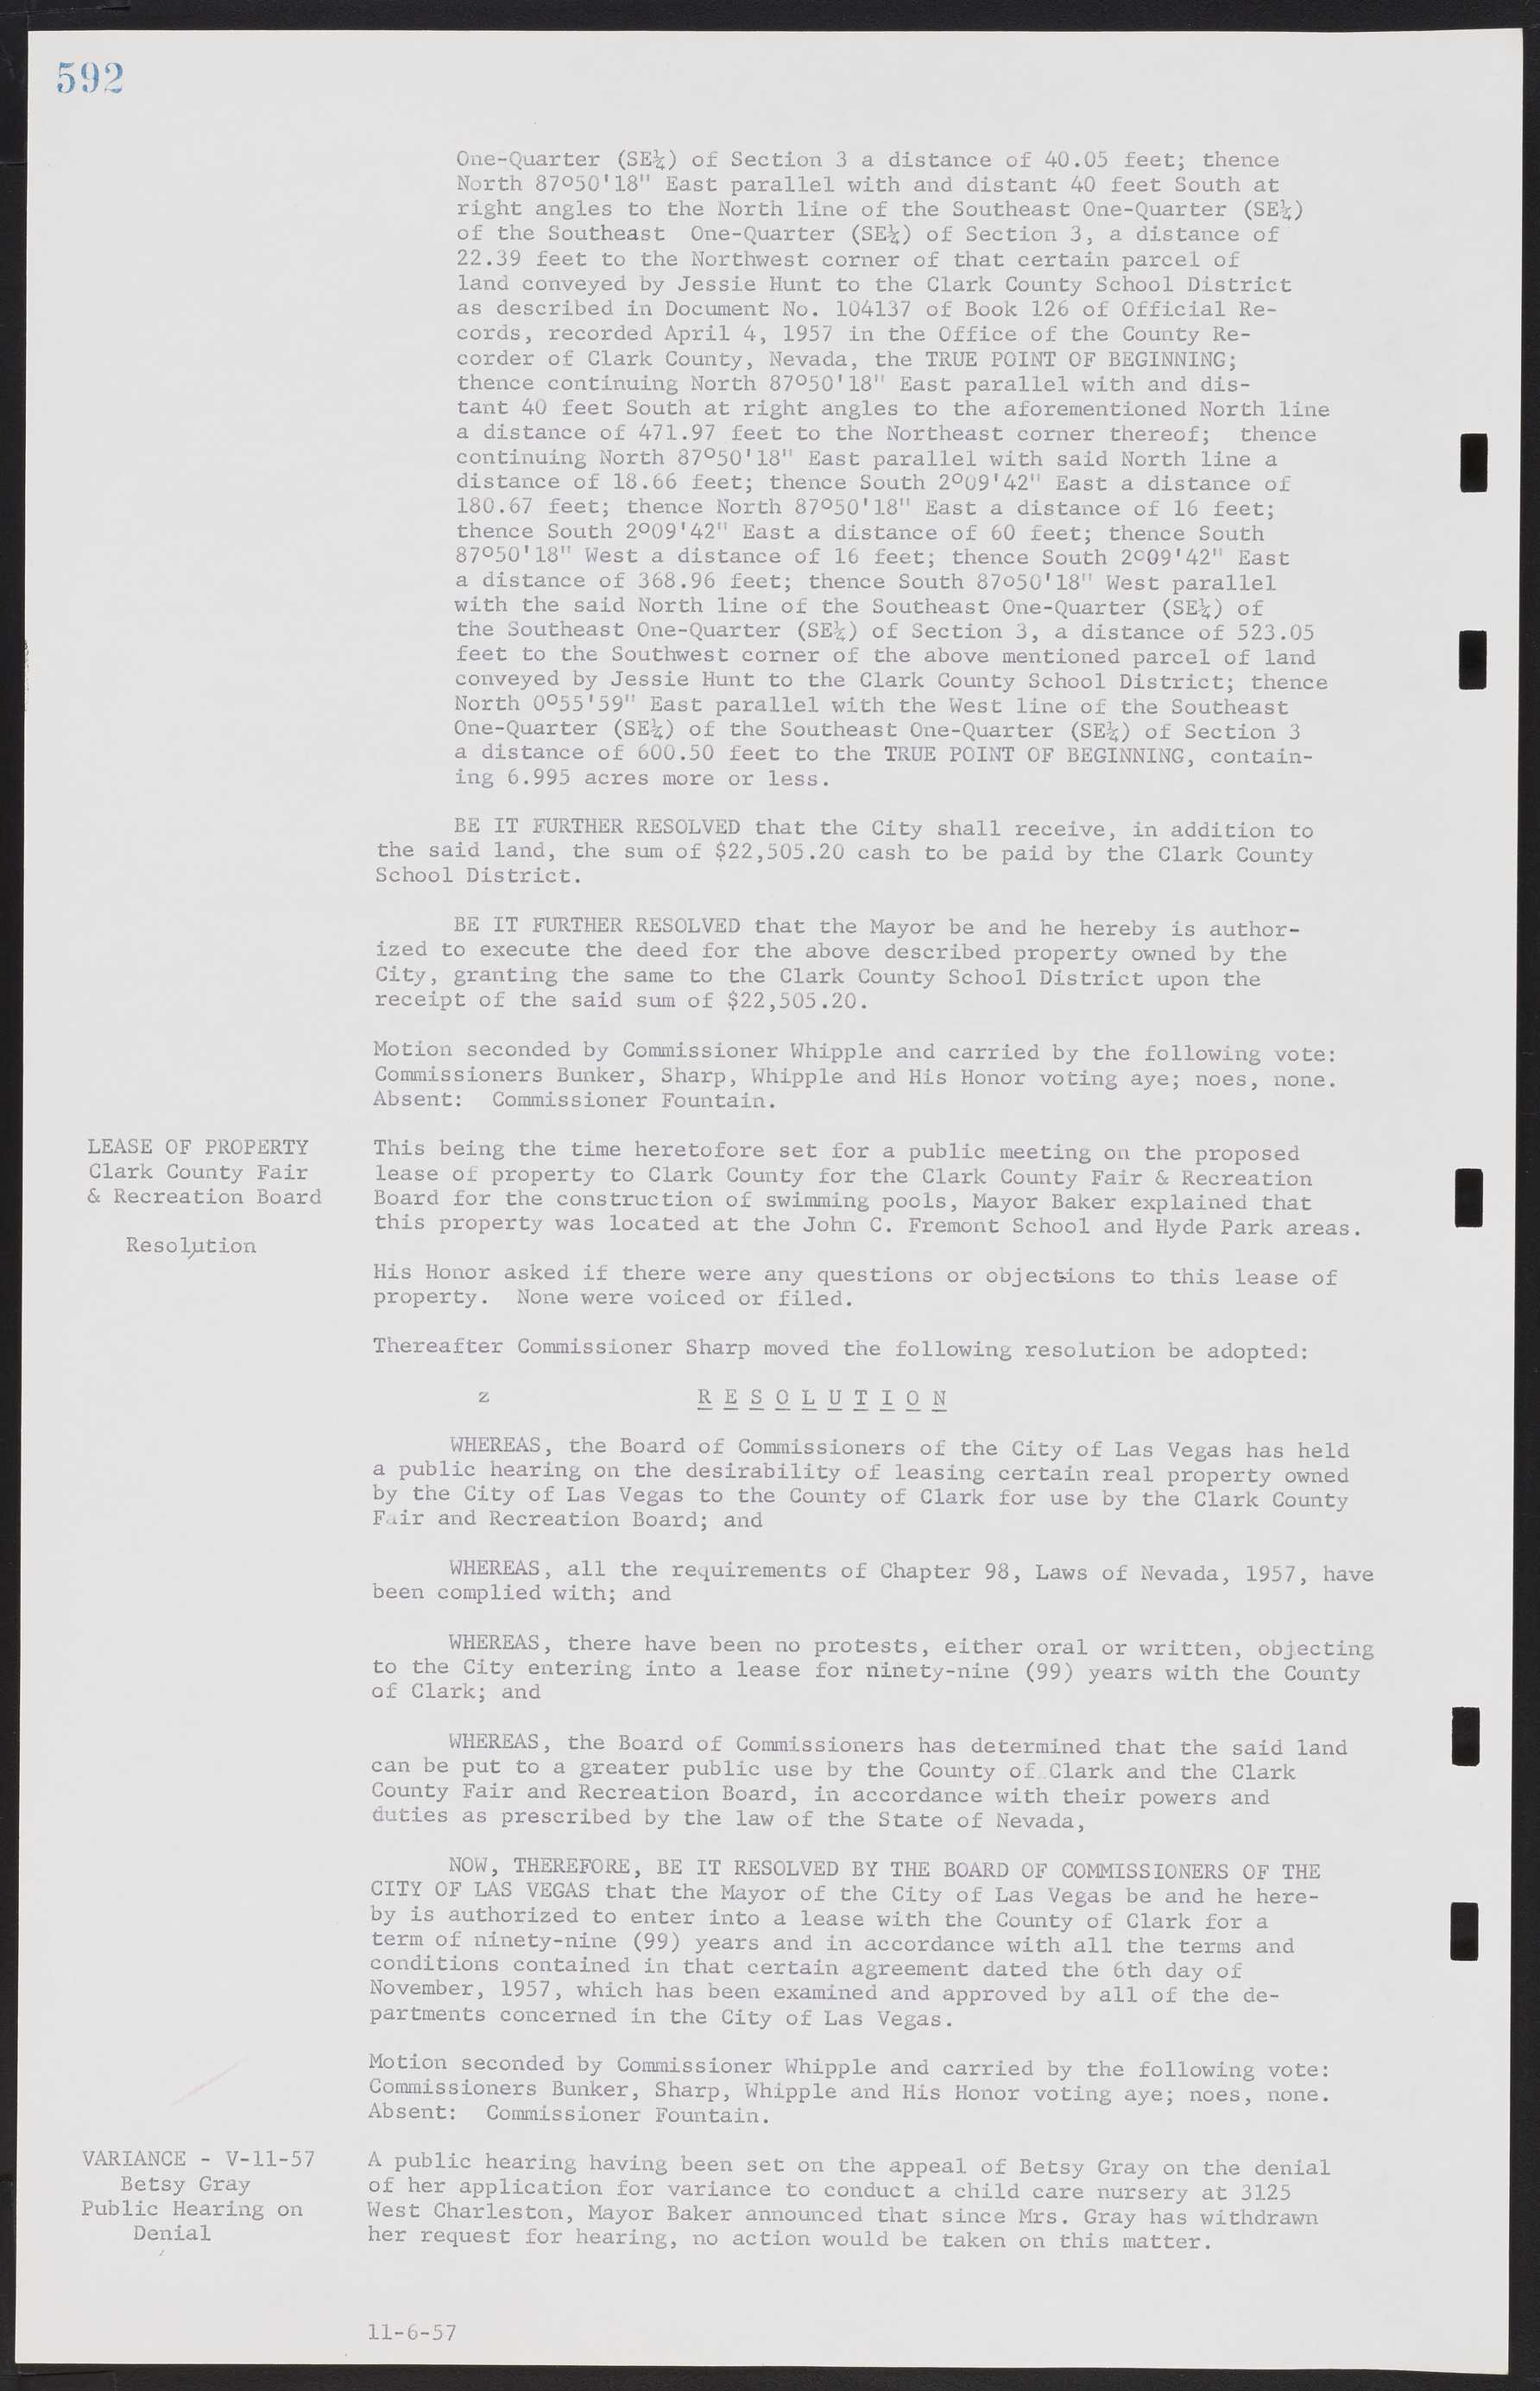 Las Vegas City Commission Minutes, September 21, 1955 to November 20, 1957, lvc000010-612